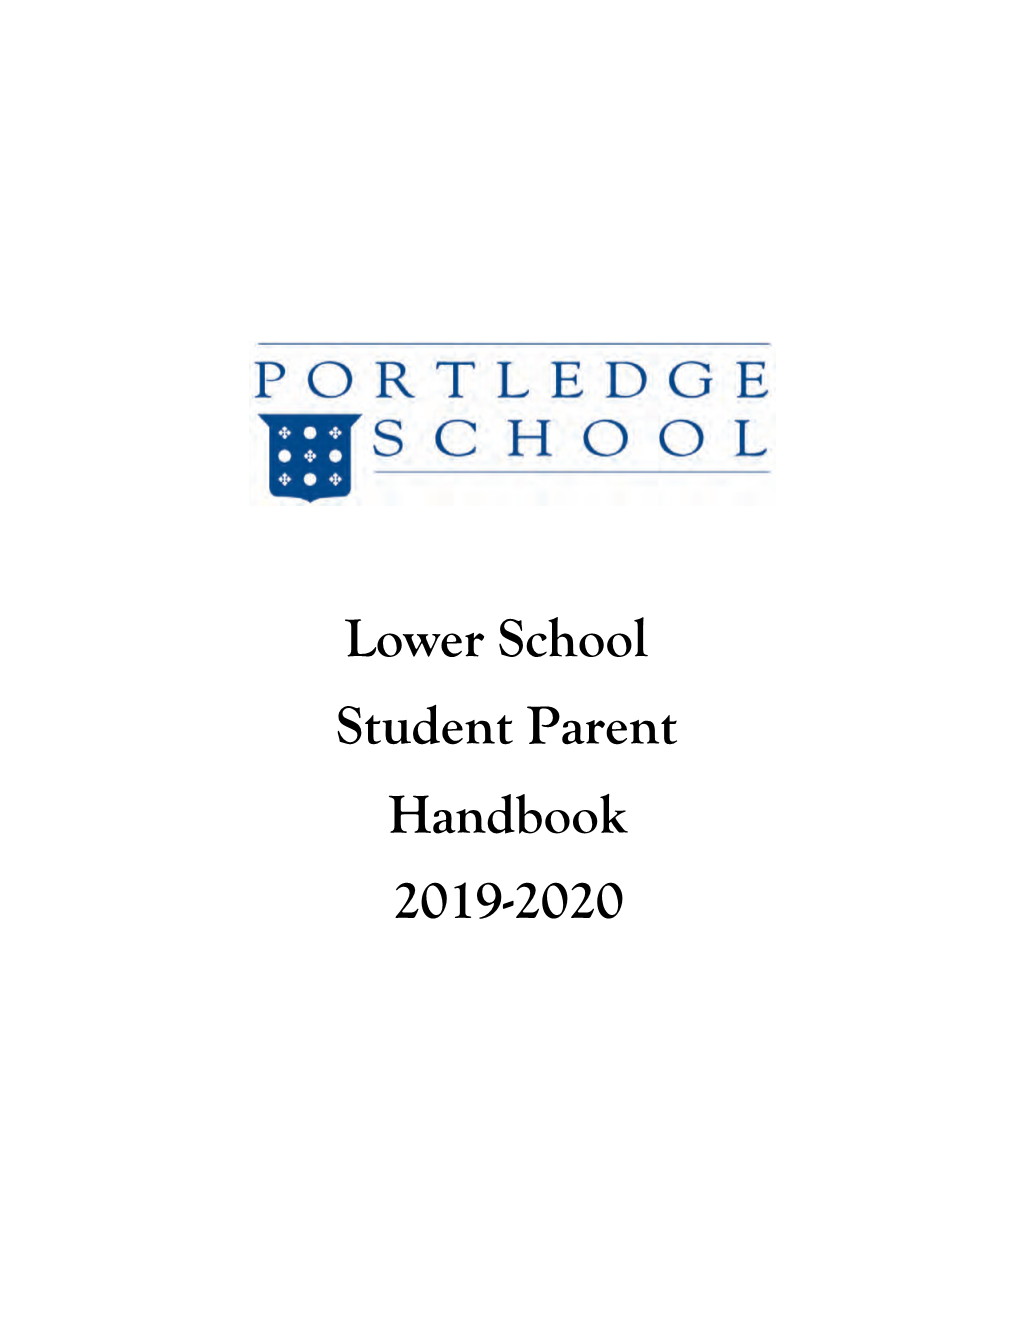 Lower School Student Parent Handbook 2019-2020